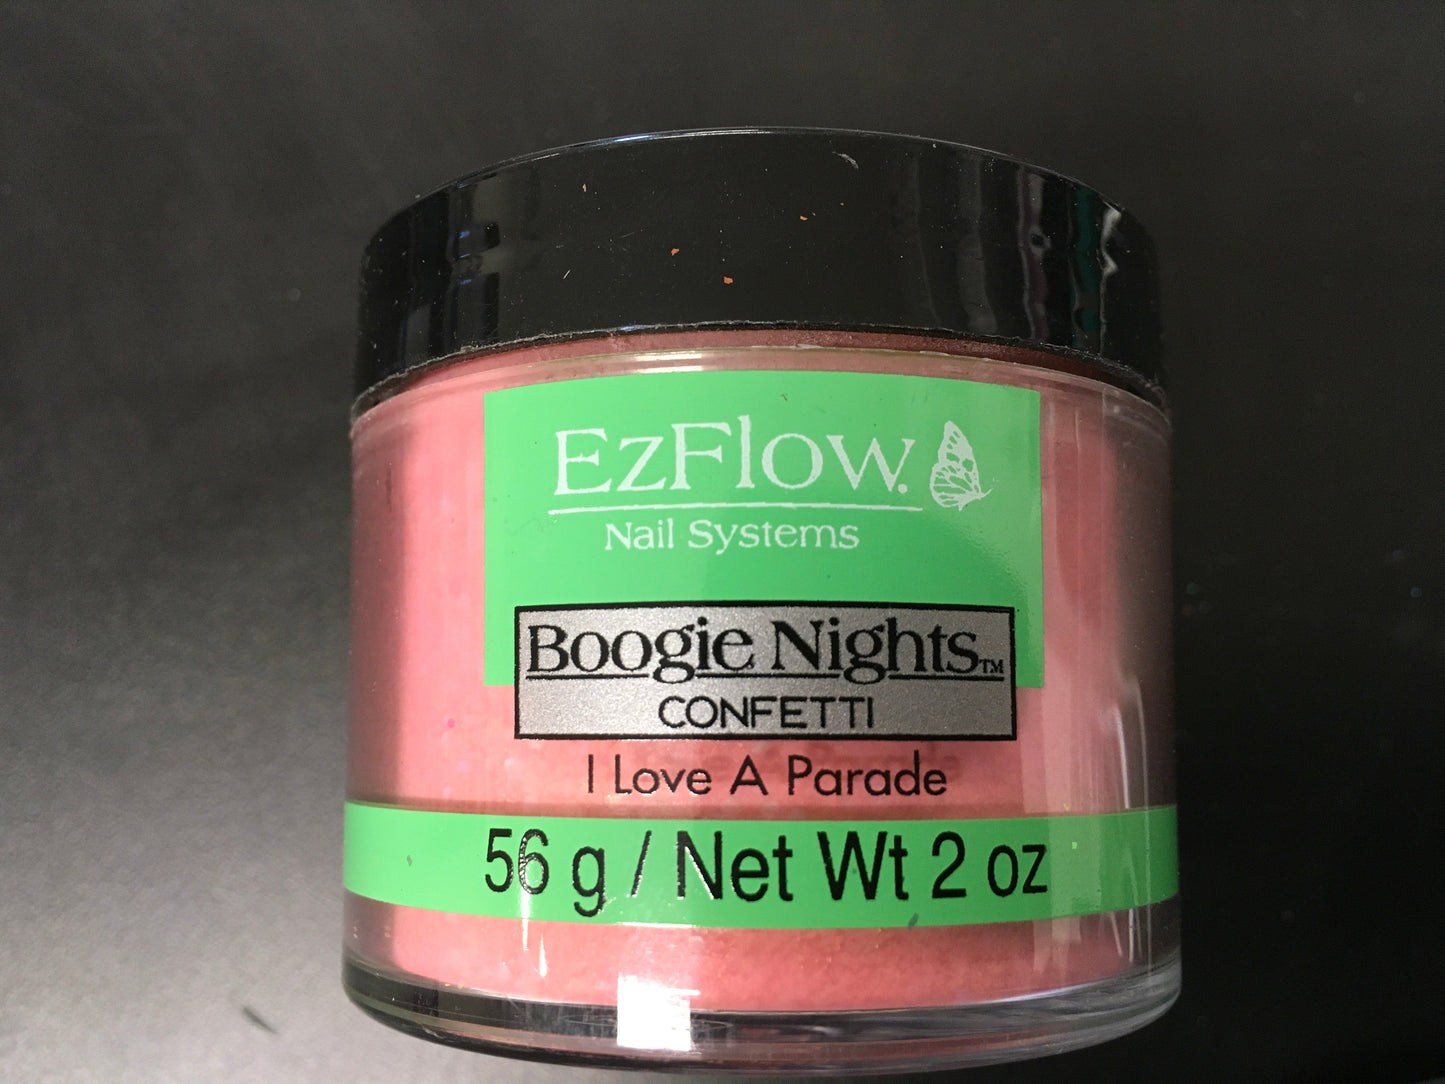 EzFlow Boogie Nights Acrylic Powder 2oz Confetti Collection